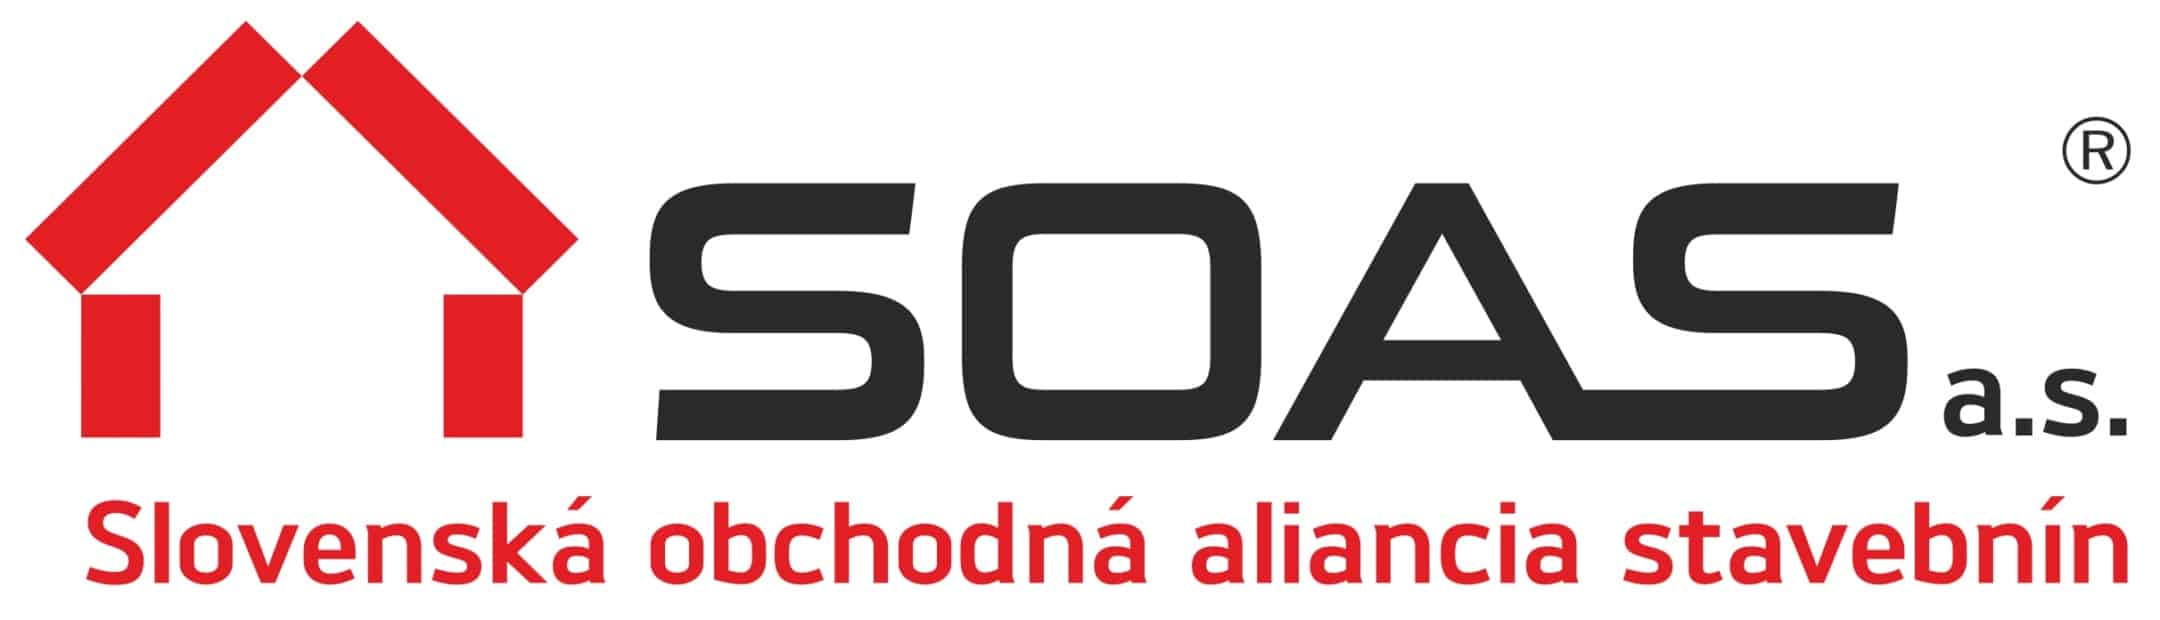 Logo Soas